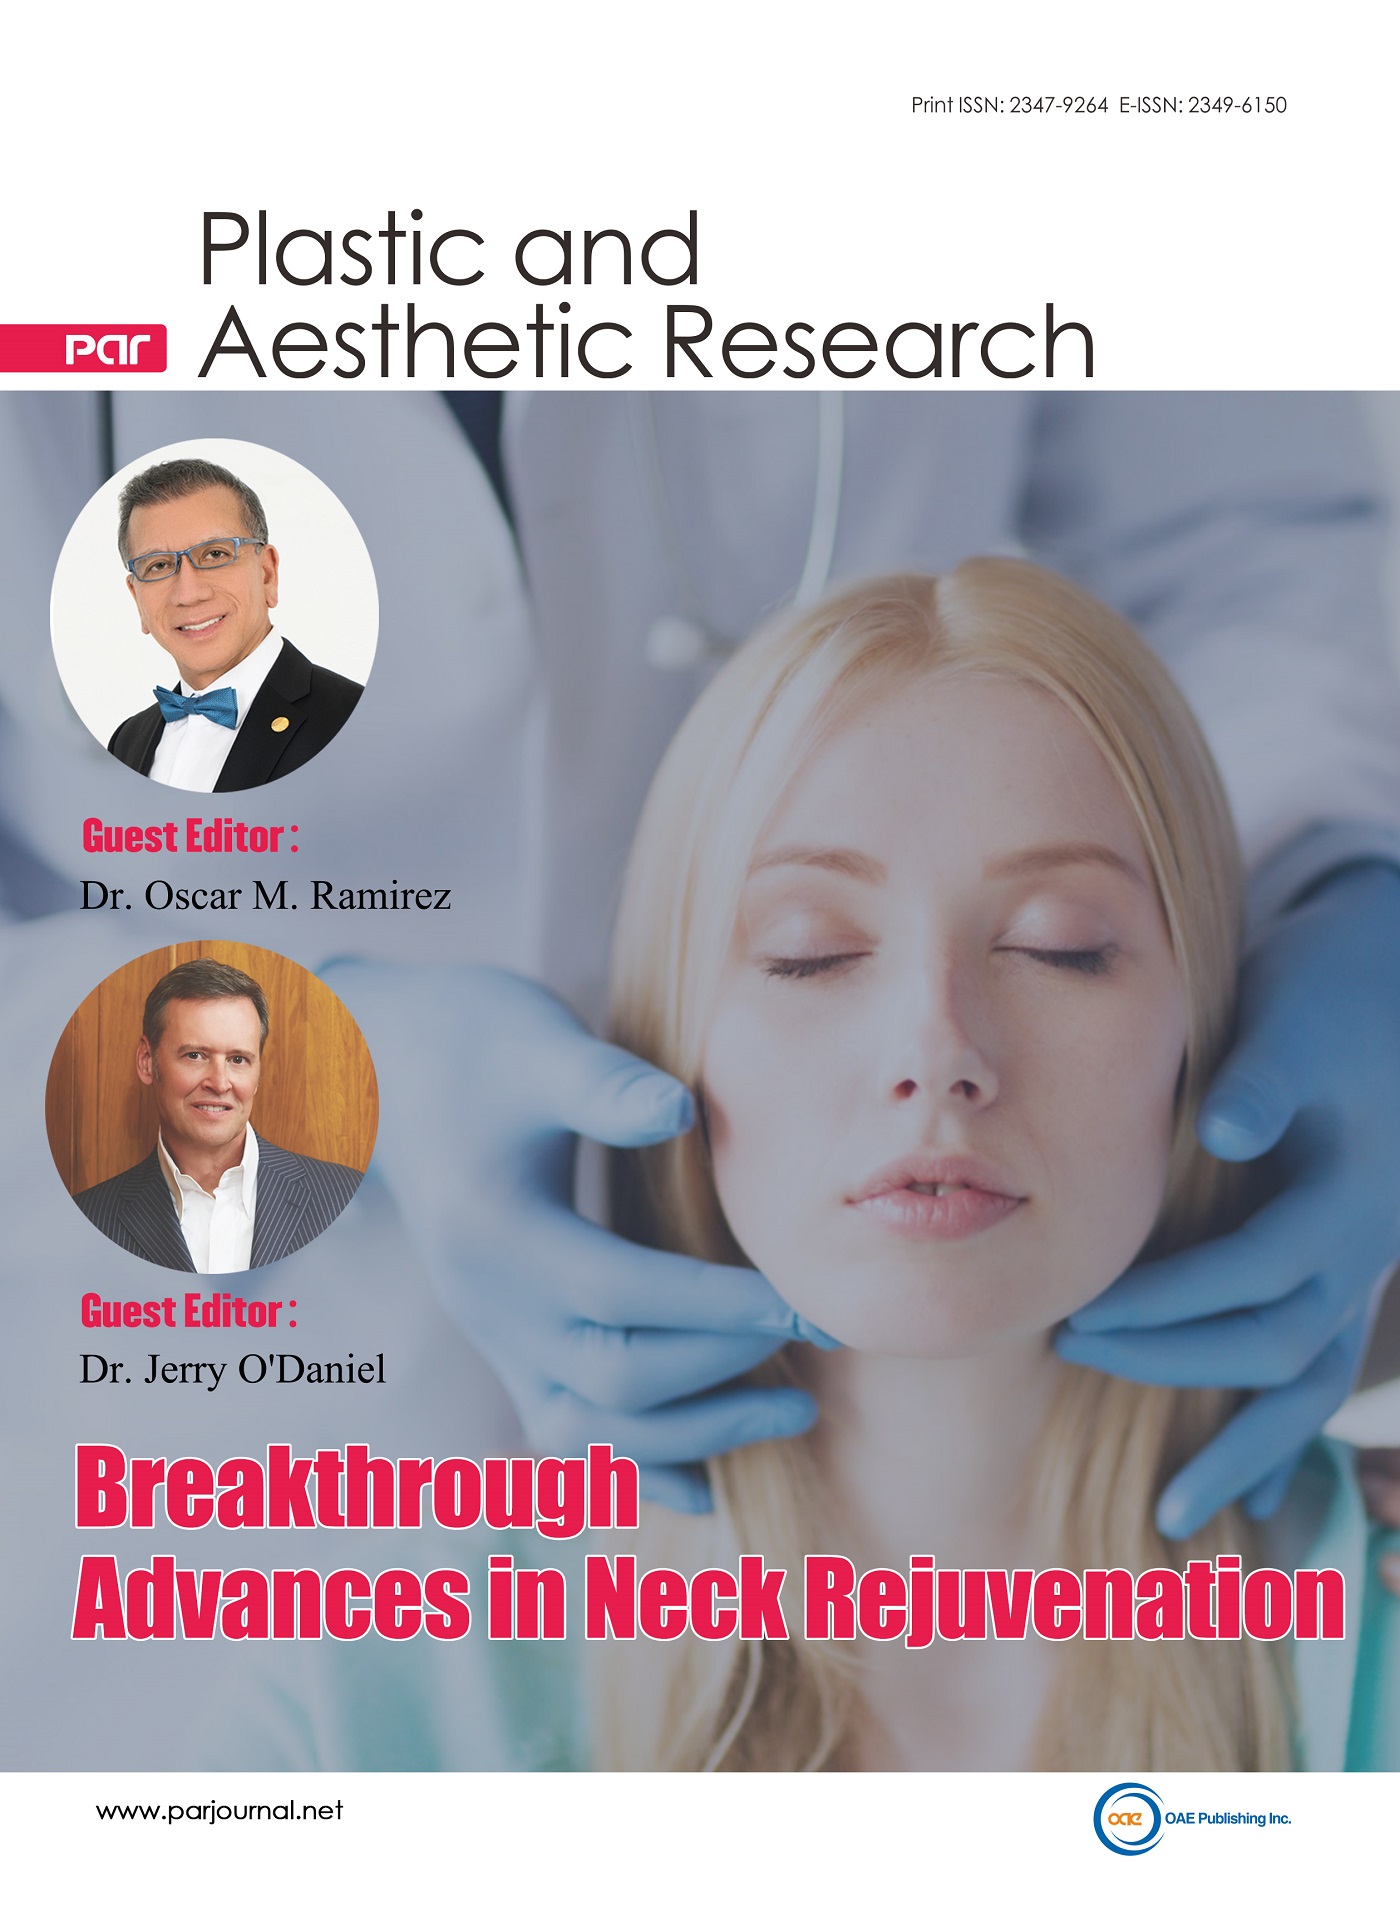 Breakthrough Advances in Neck Rejuvenation